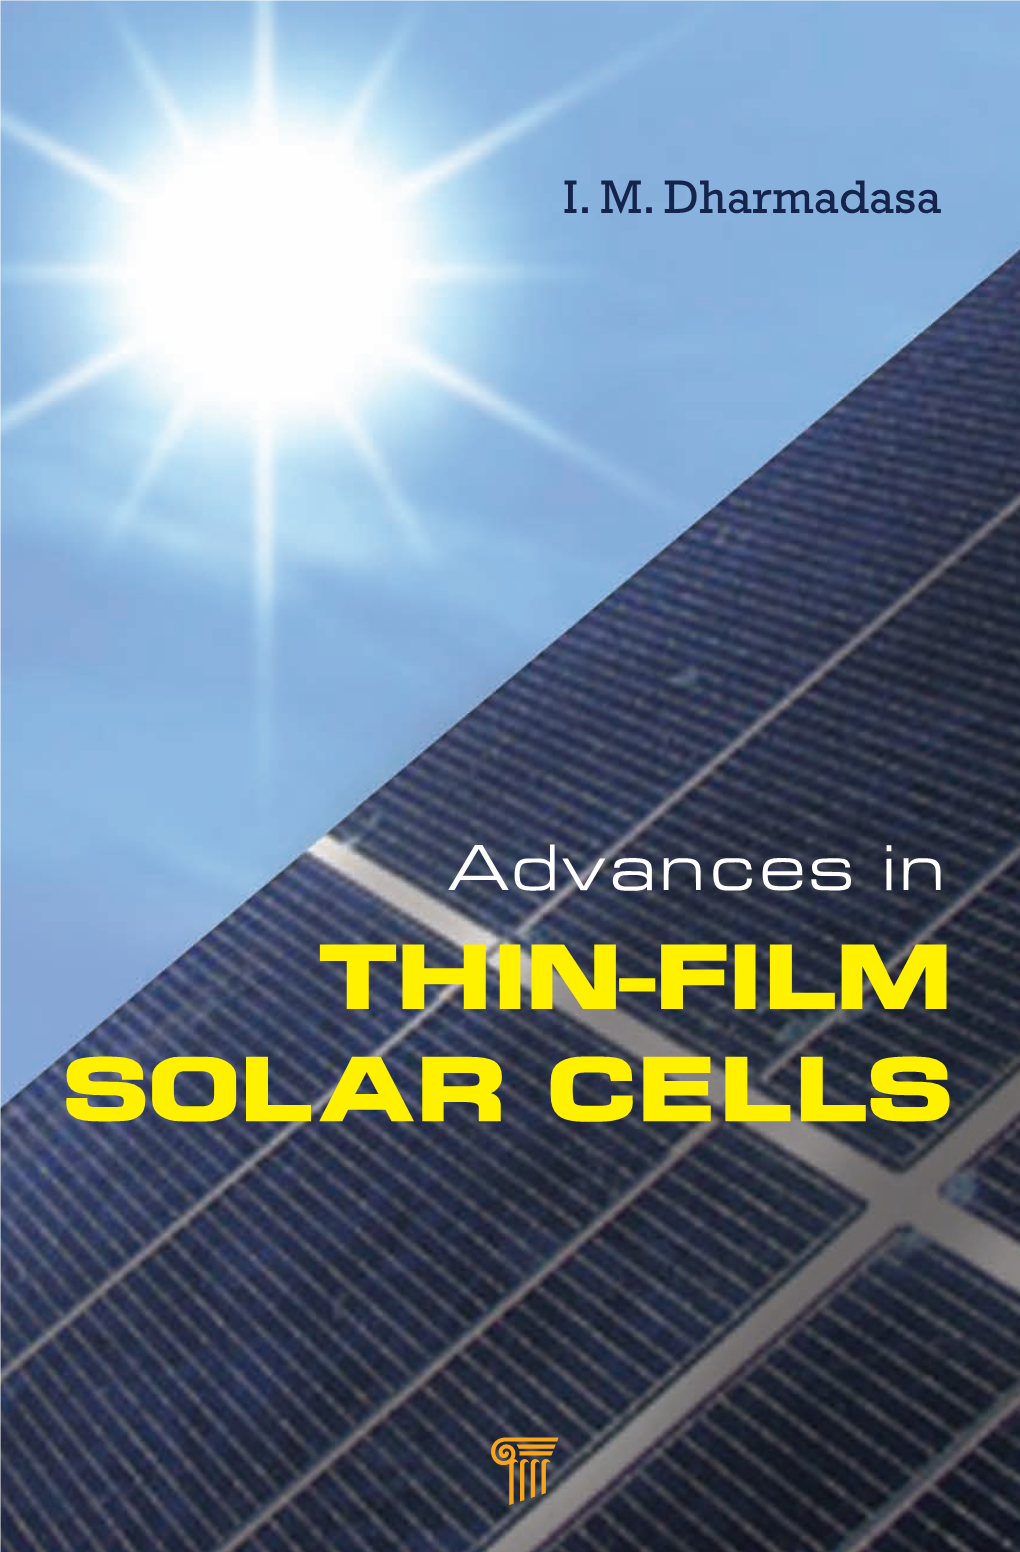 Advances in Thin-Film Solar Cells I